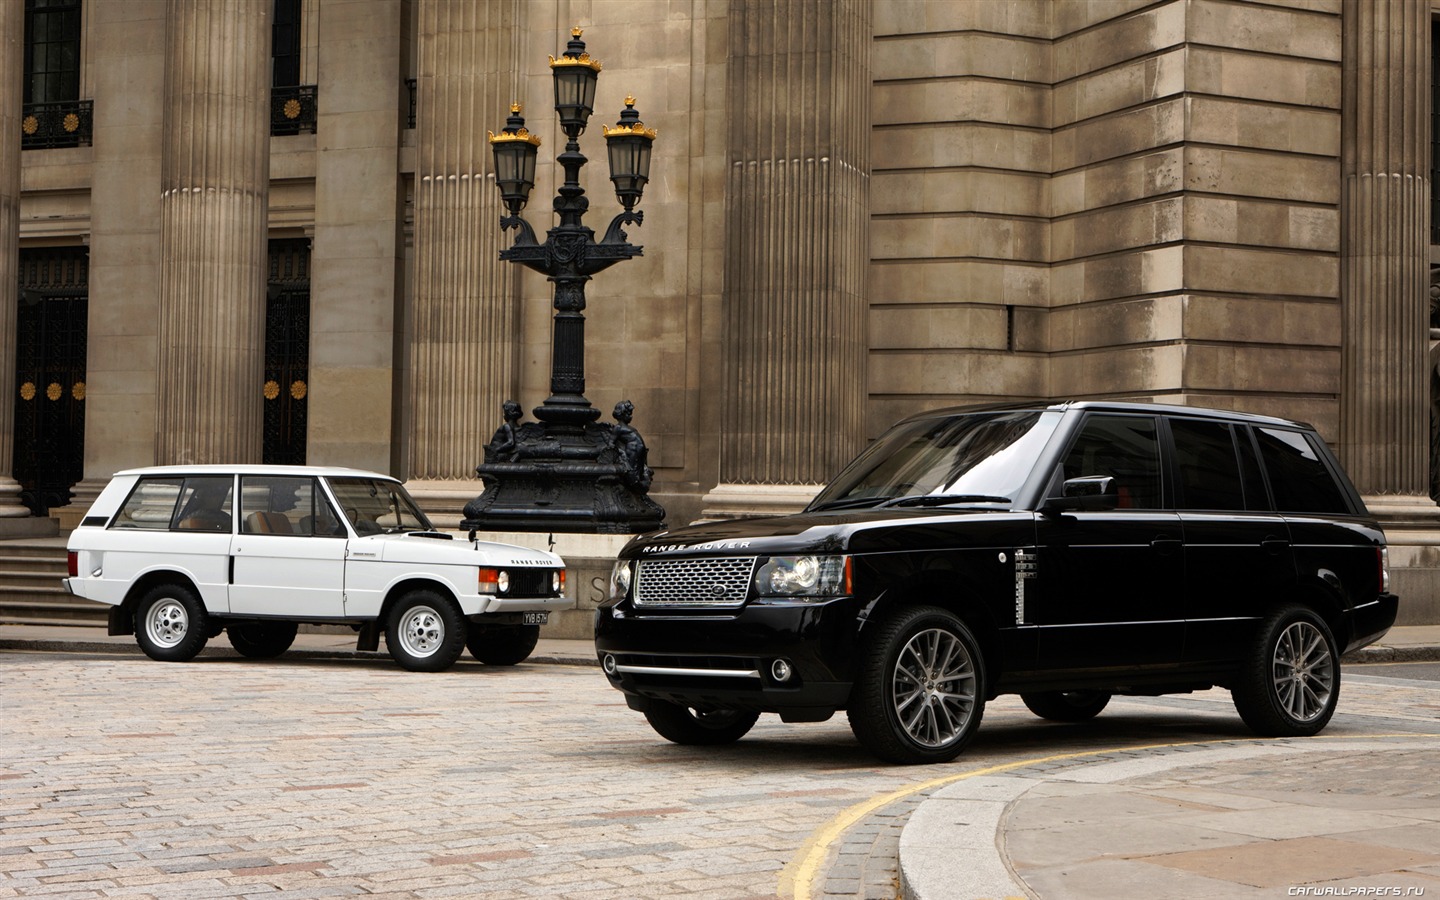 Land Rover Range Rover Black Edition - 2011 路虎10 - 1440x900